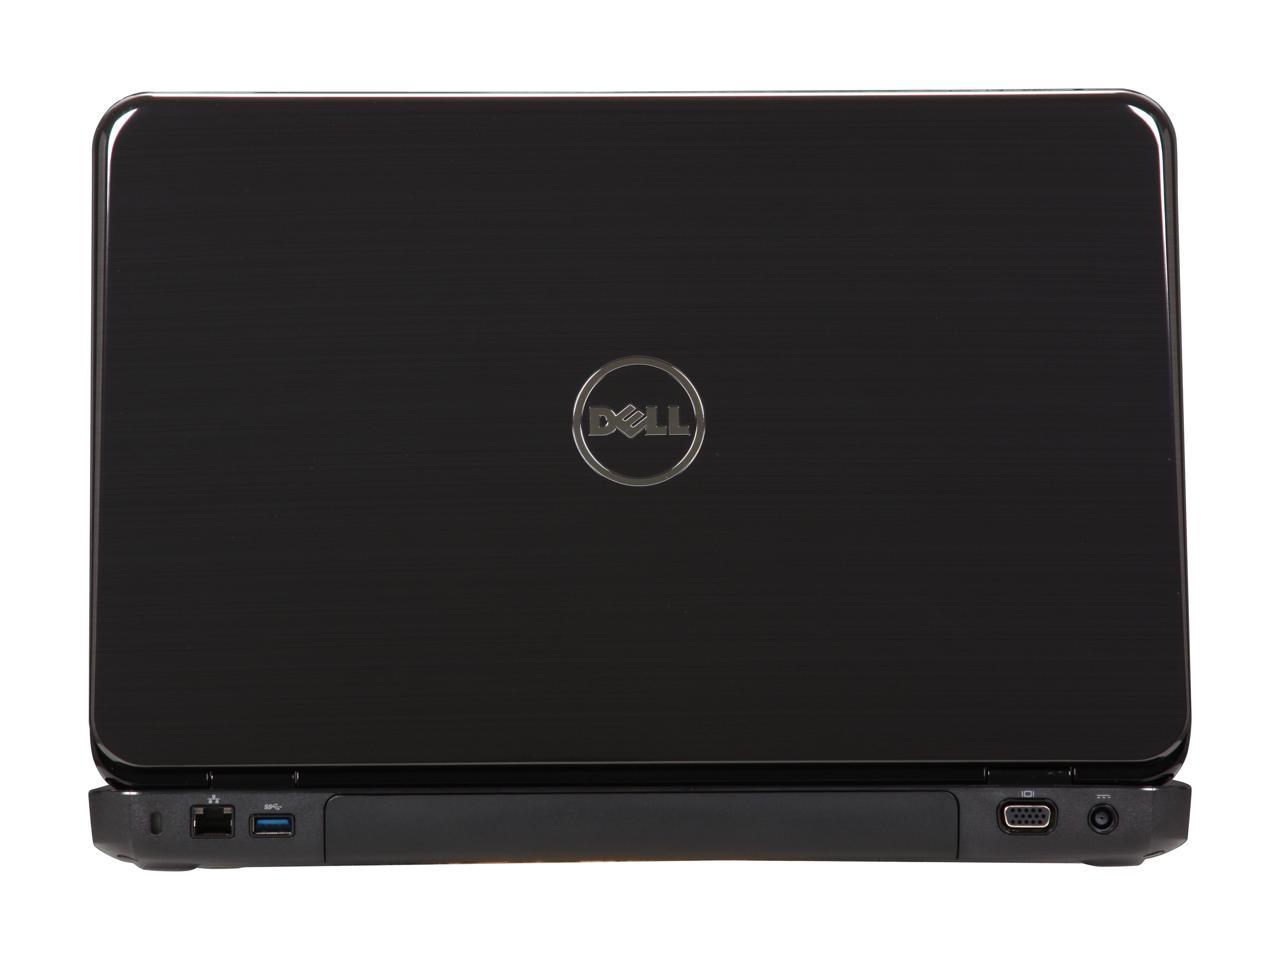 DELL Laptop Inspiron 15R (N5110) Intel Core i5 2nd Gen 2410M (2.30 GHz